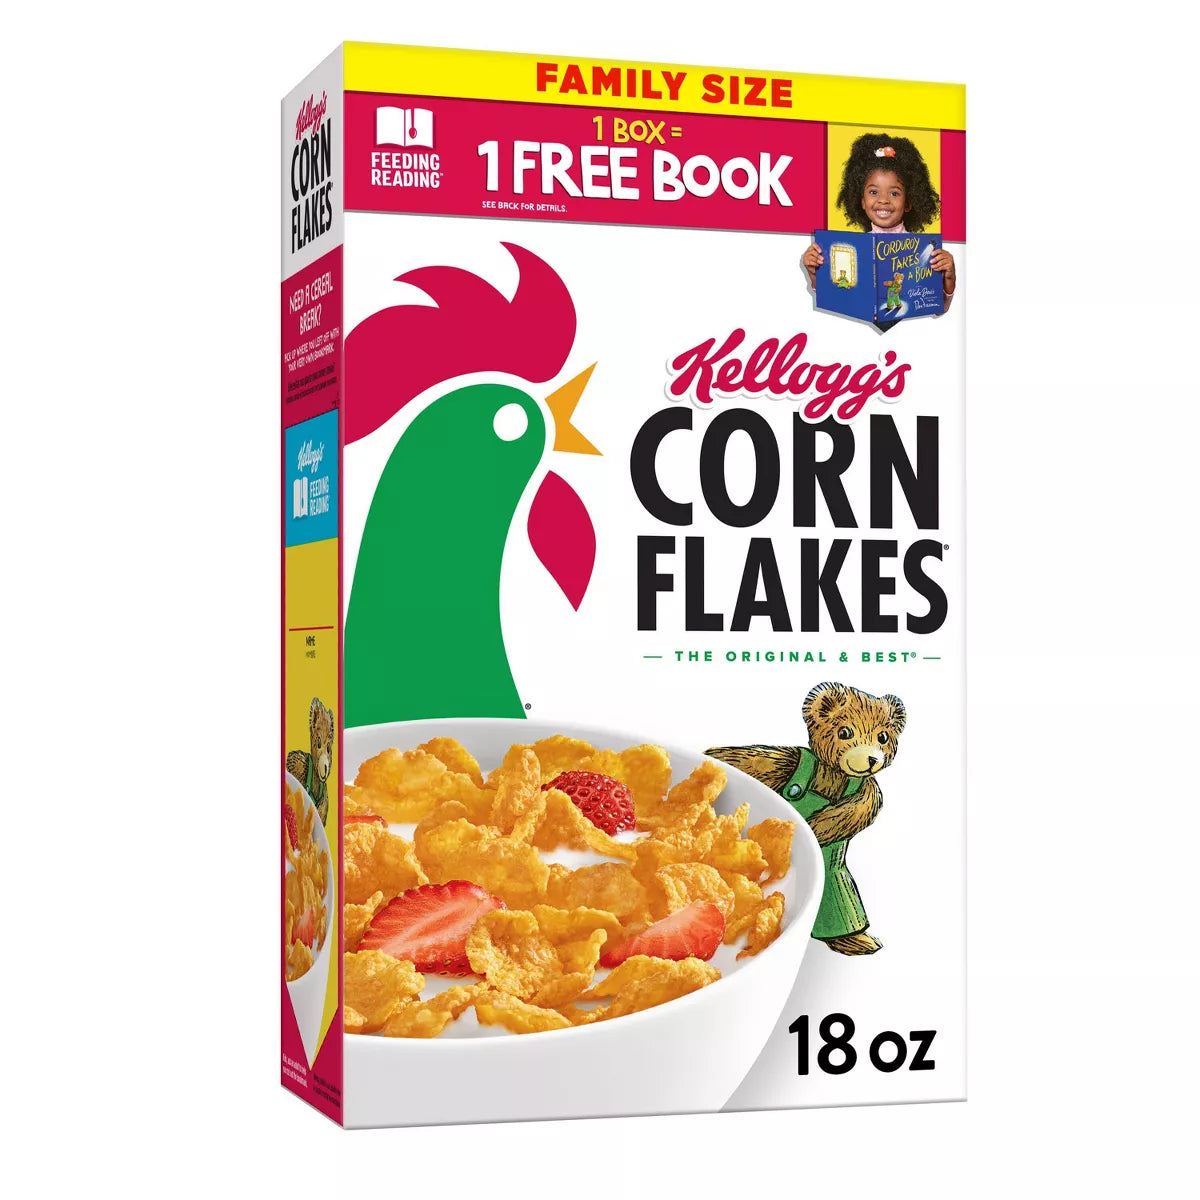 1 box of Kelloggs corn flakes